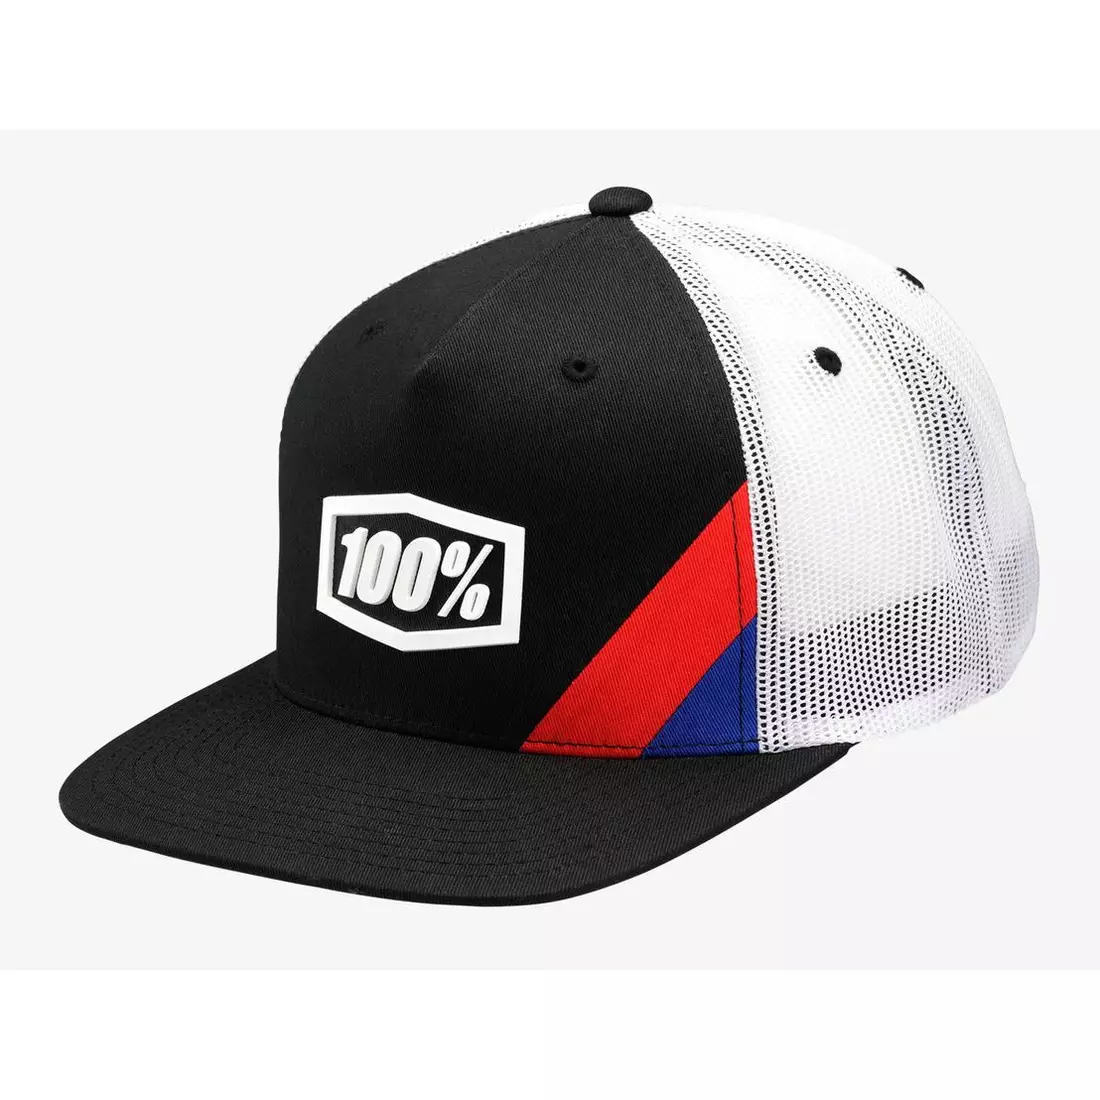 100% șapcă de baseball cornerstone trucker hat black STO-20050-001-01